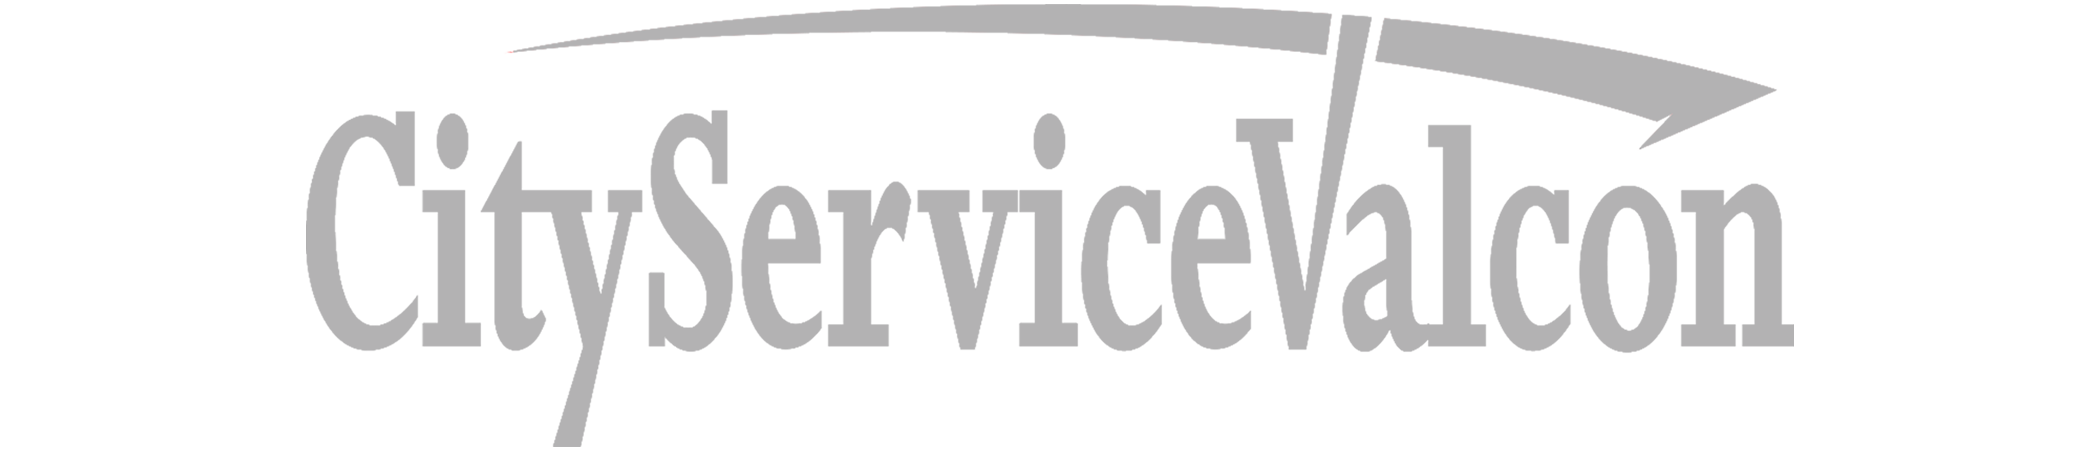 CityServiceValcon Logo. Links to CityServiceValcon website.